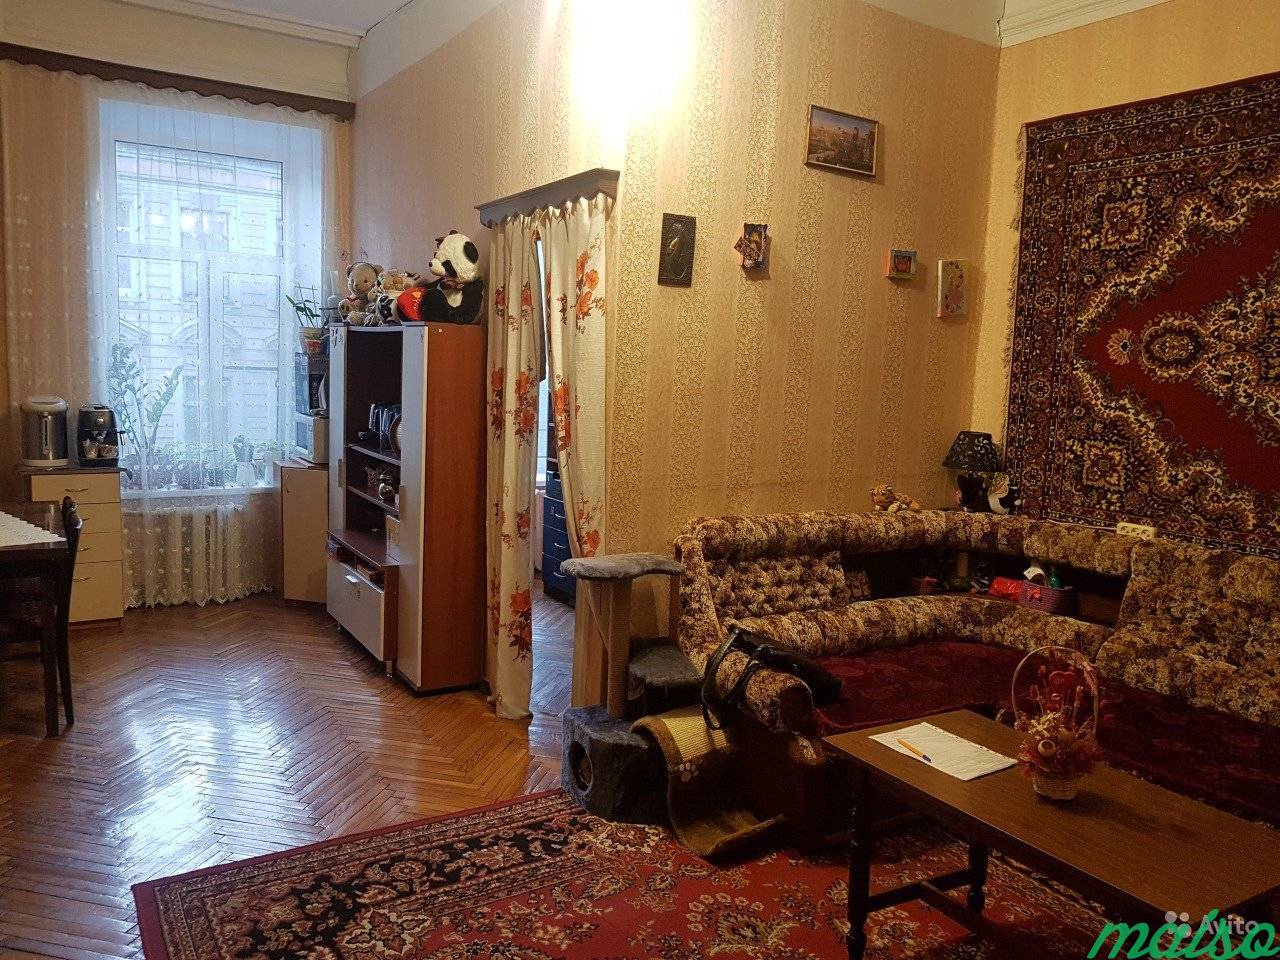 Комната 33 м² в 6-к, 4/5 эт. в Санкт-Петербурге. Фото 2